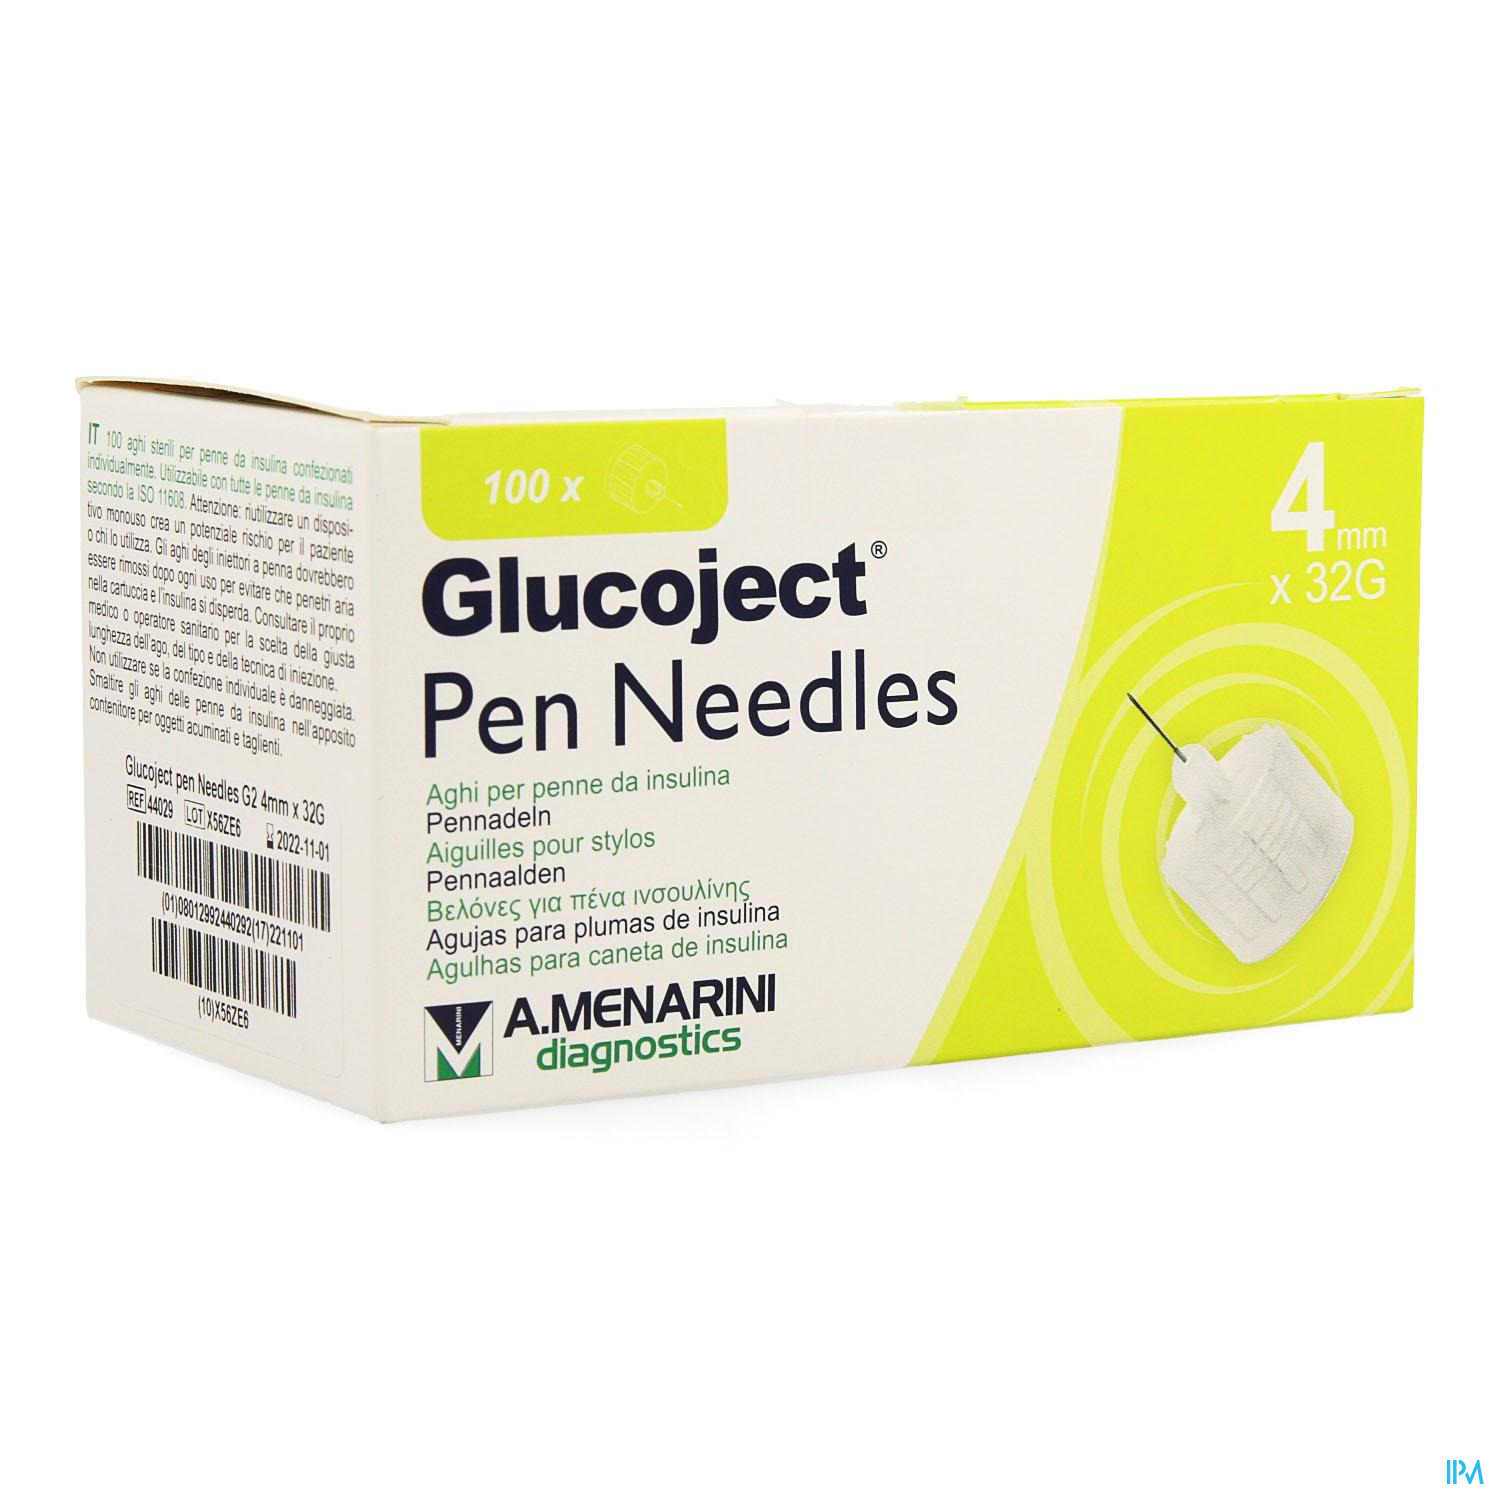 Glucoject Pen Needles 5mm 31G - 100 Aghi Sterili per Penna da Insulina